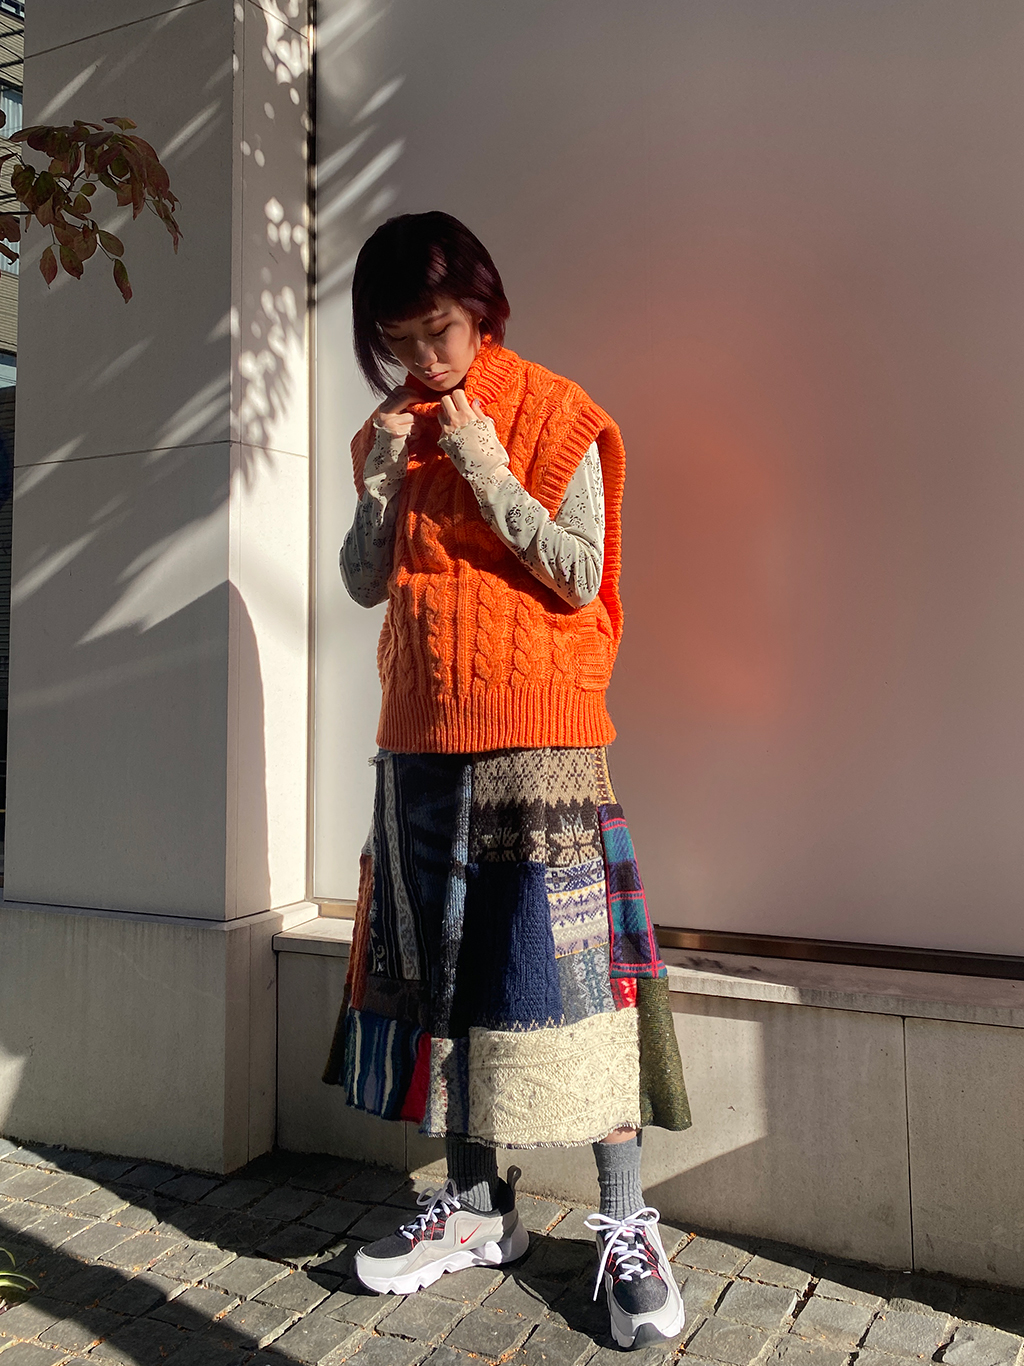 tomoki yurita by ライチ / ANATOMY OF HEARING | H.P.FRANCE公式サイト